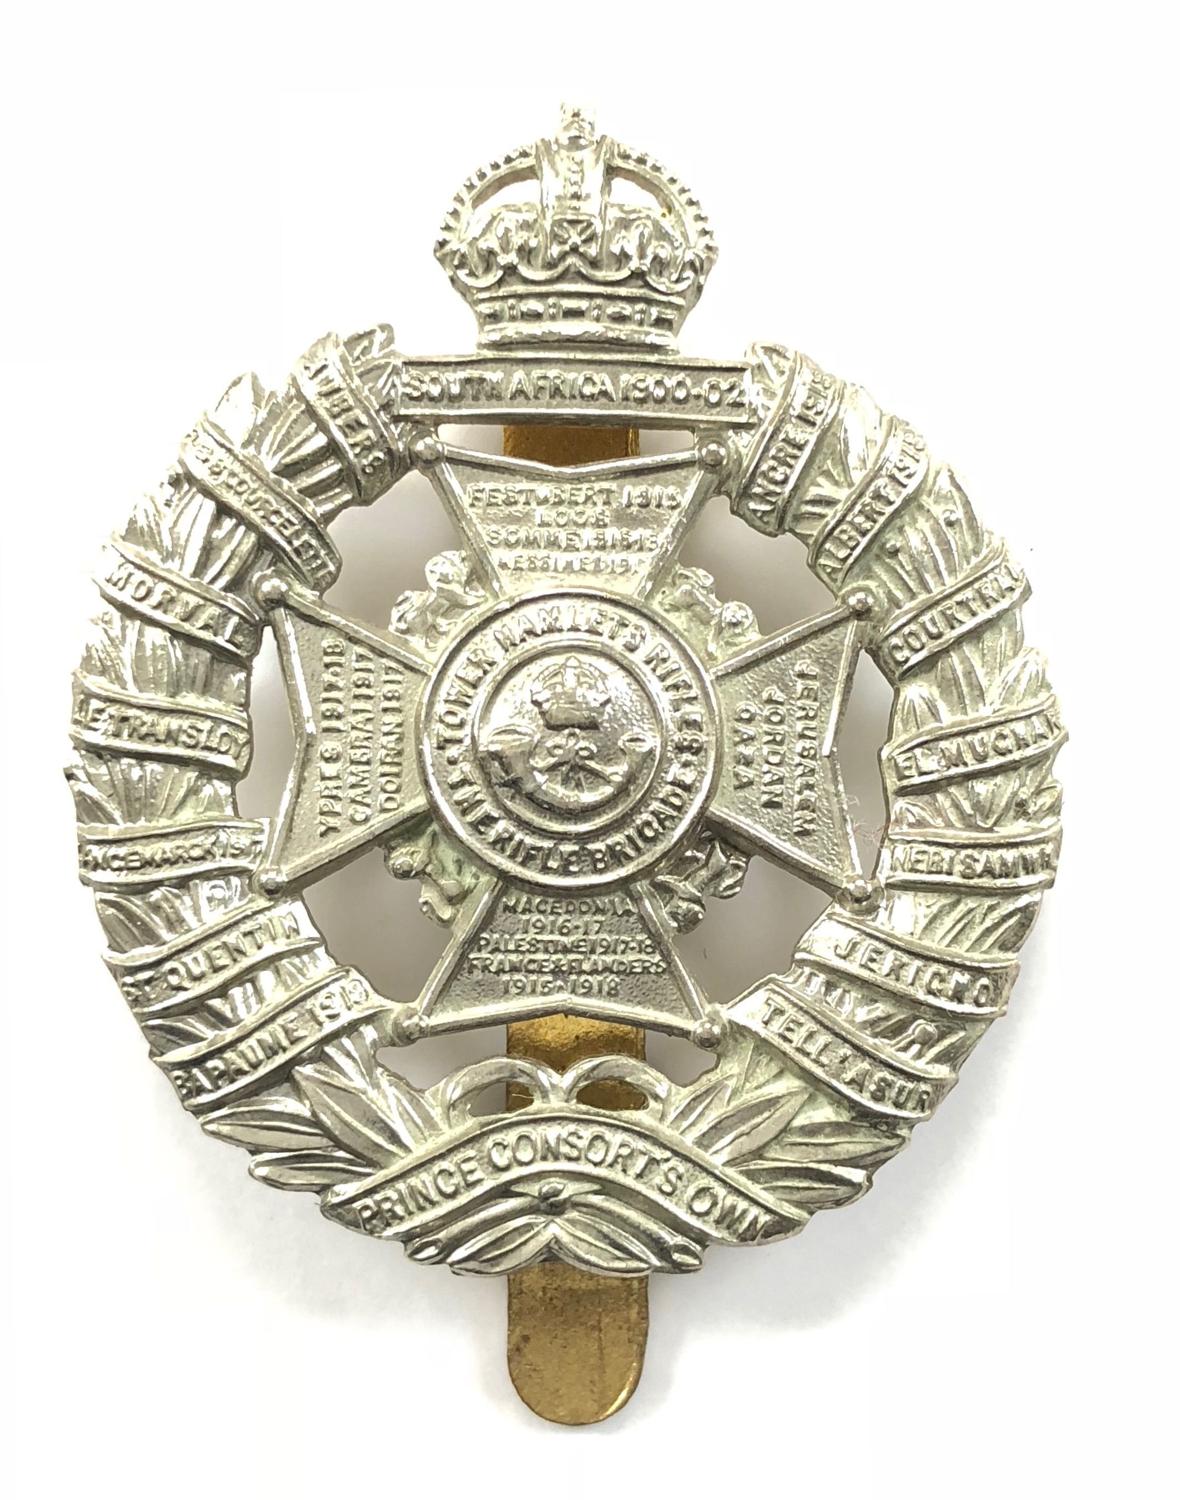 Tower Hamlets Rifles post 1926 white metal cap badge